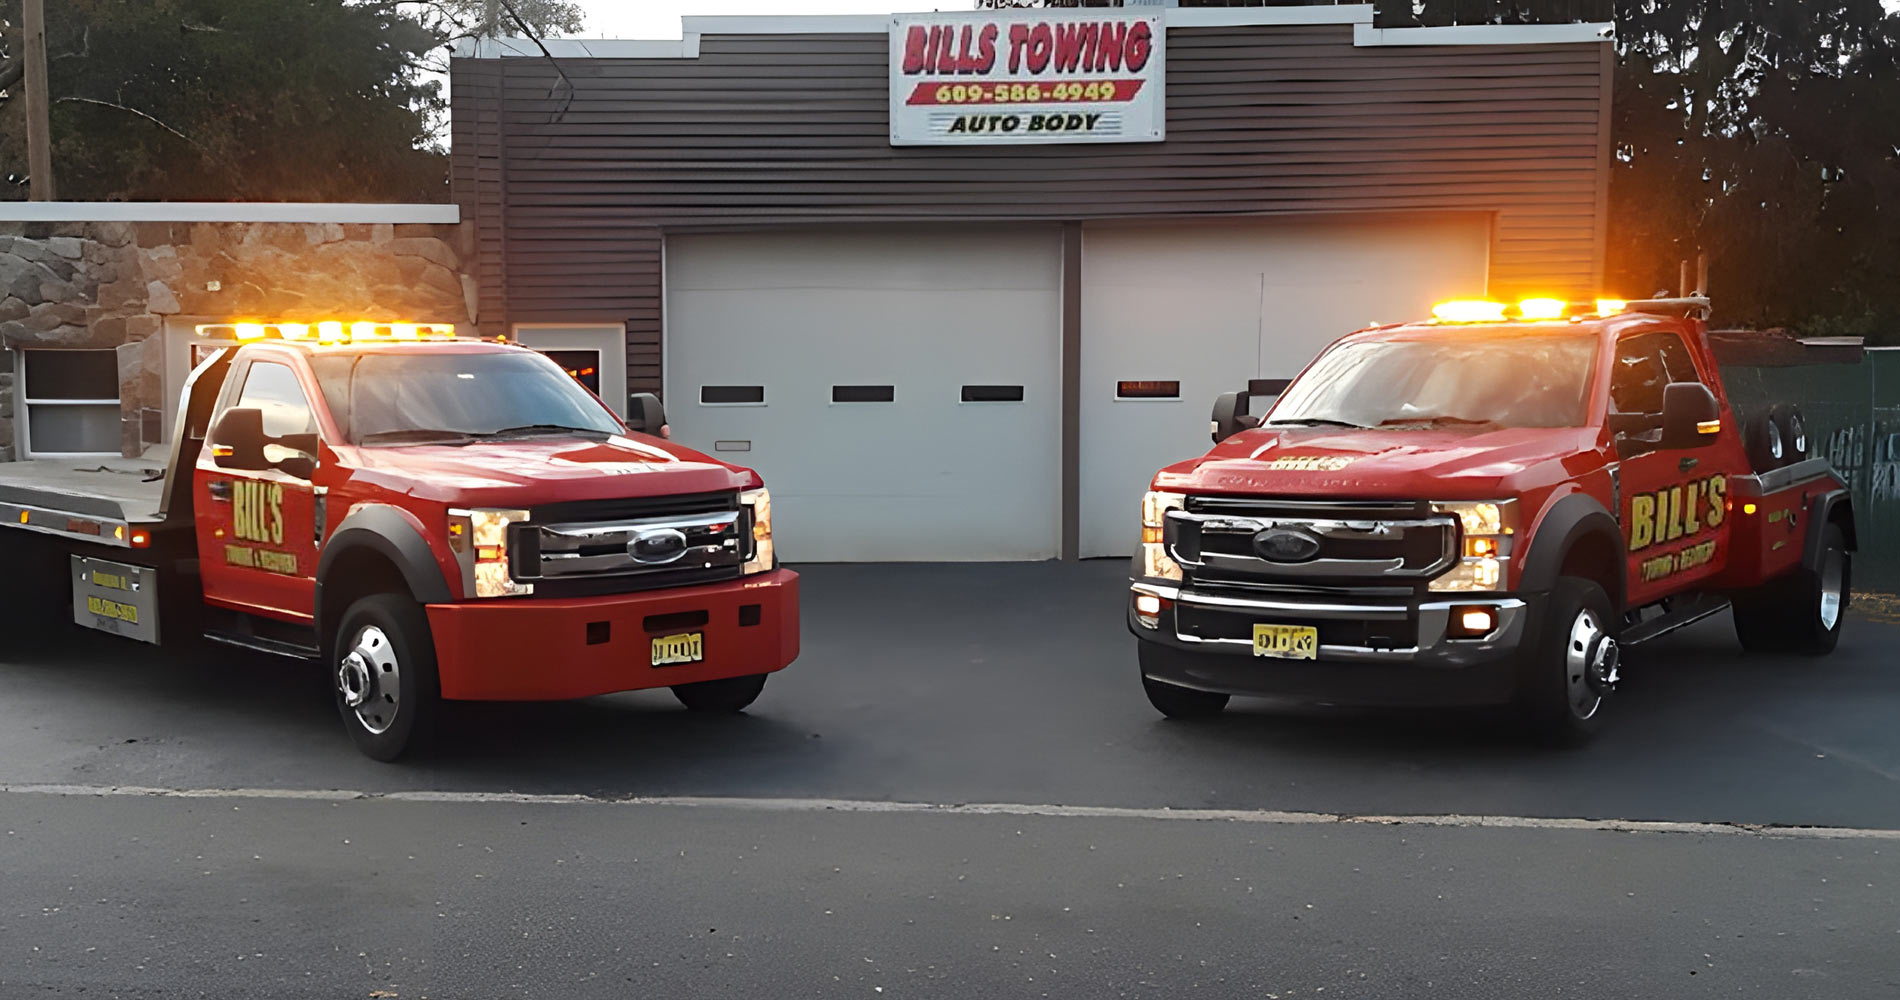 Bill's Towing | Bordentown, NJ 08505